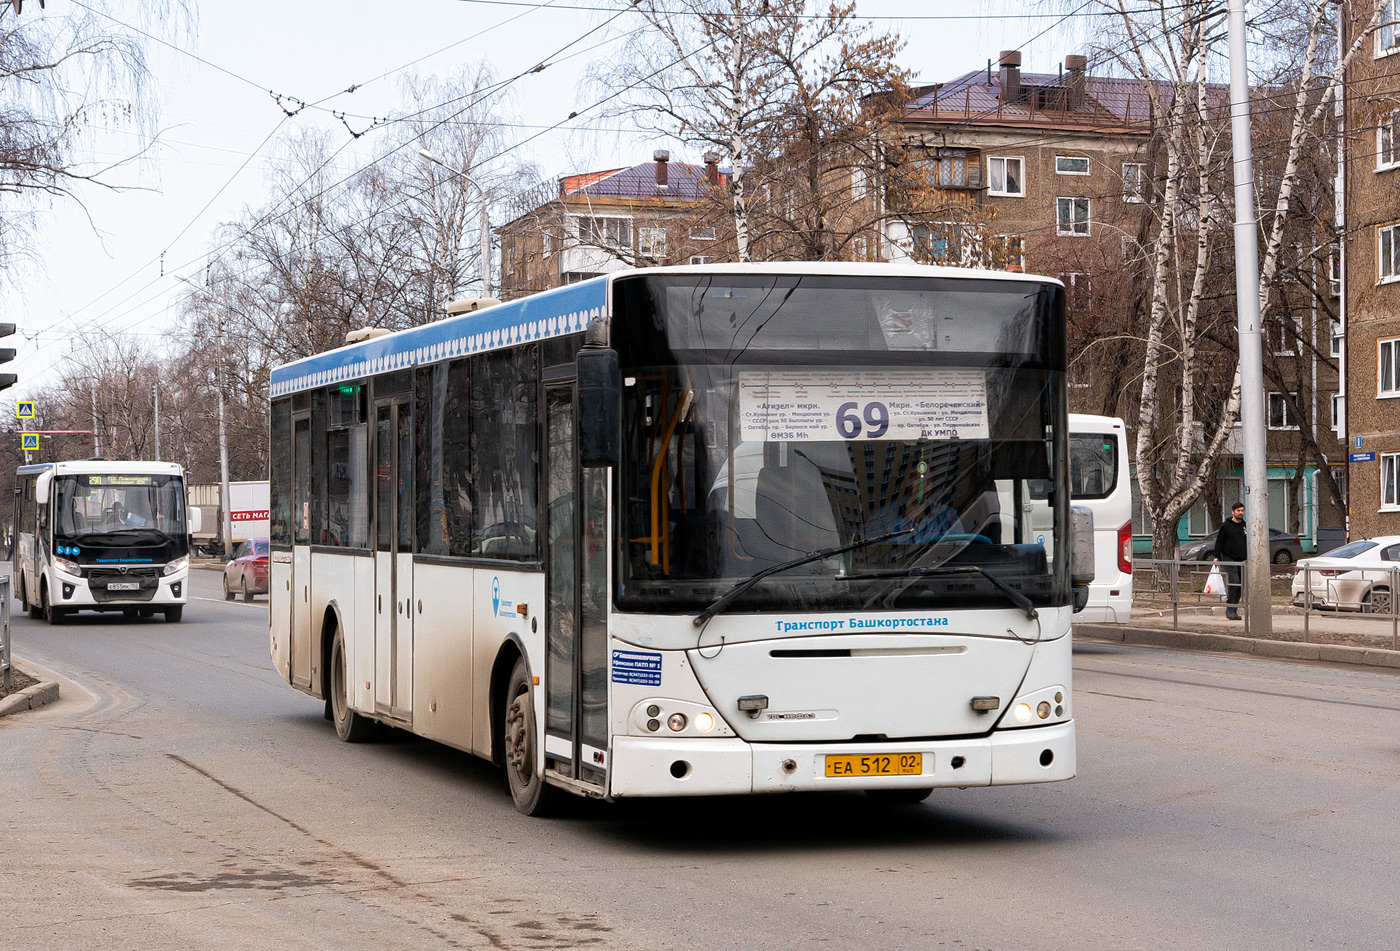 Башкартастан, VDL-НефАЗ-52997 Transit № 0182